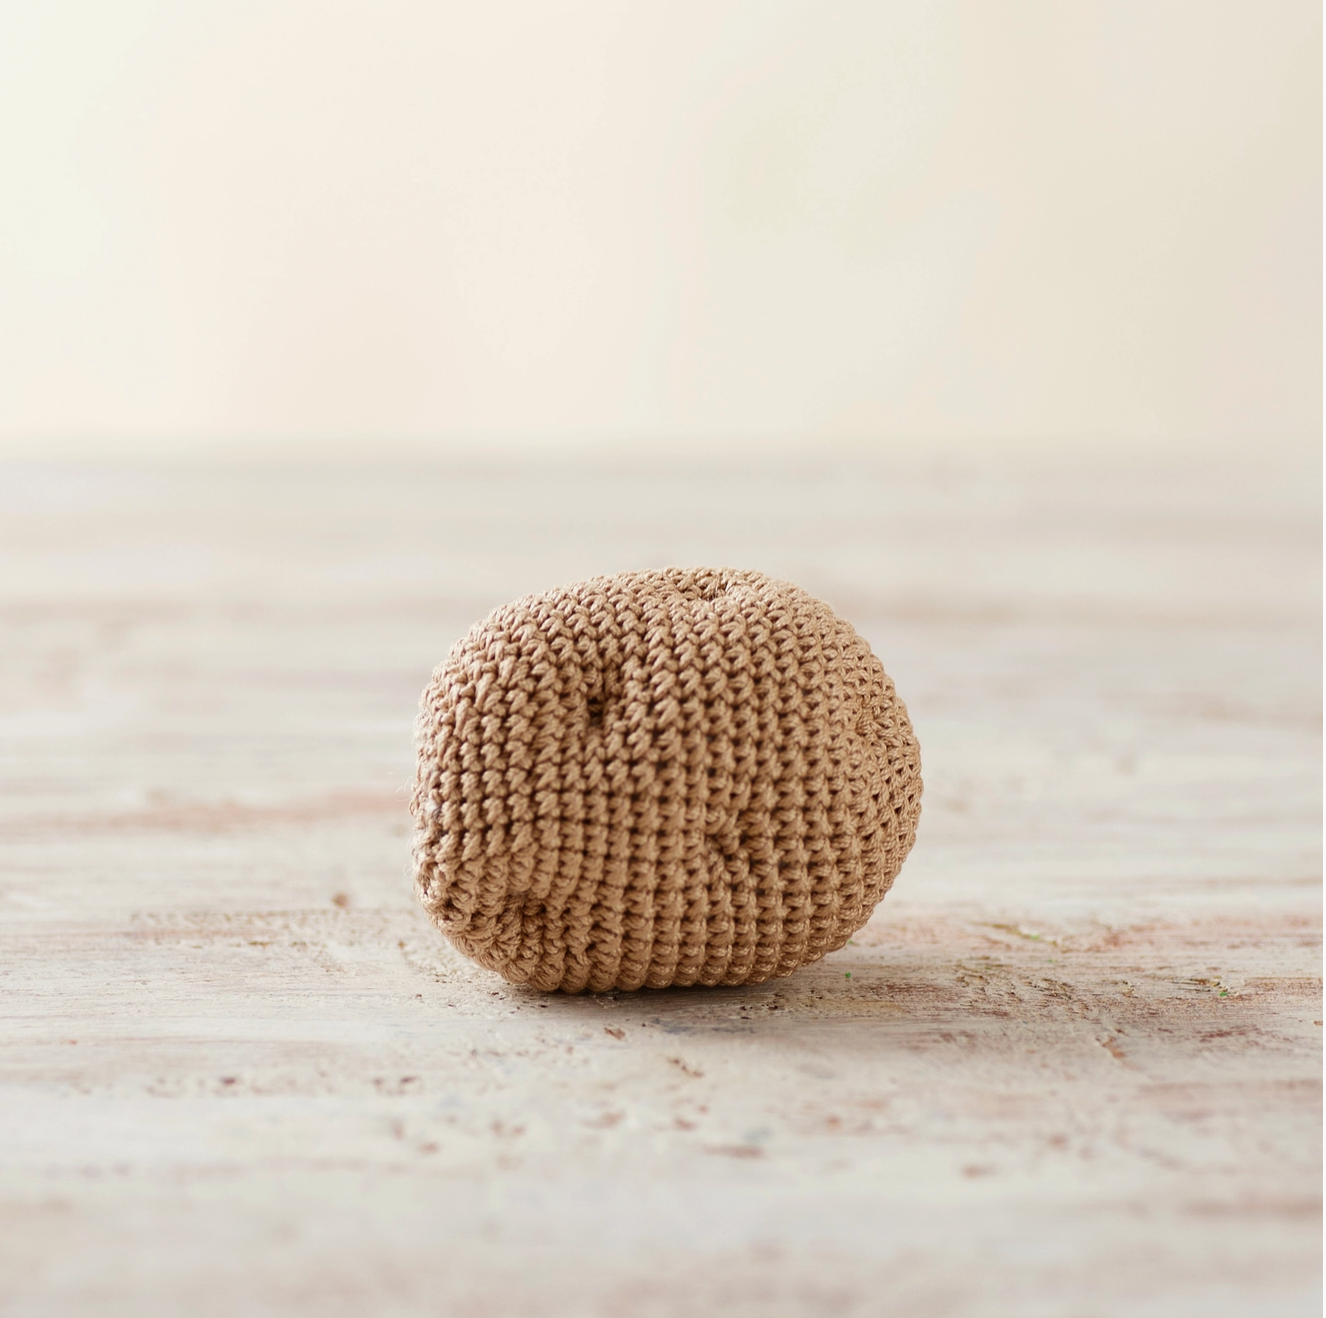 Crochet Play Food: Potato